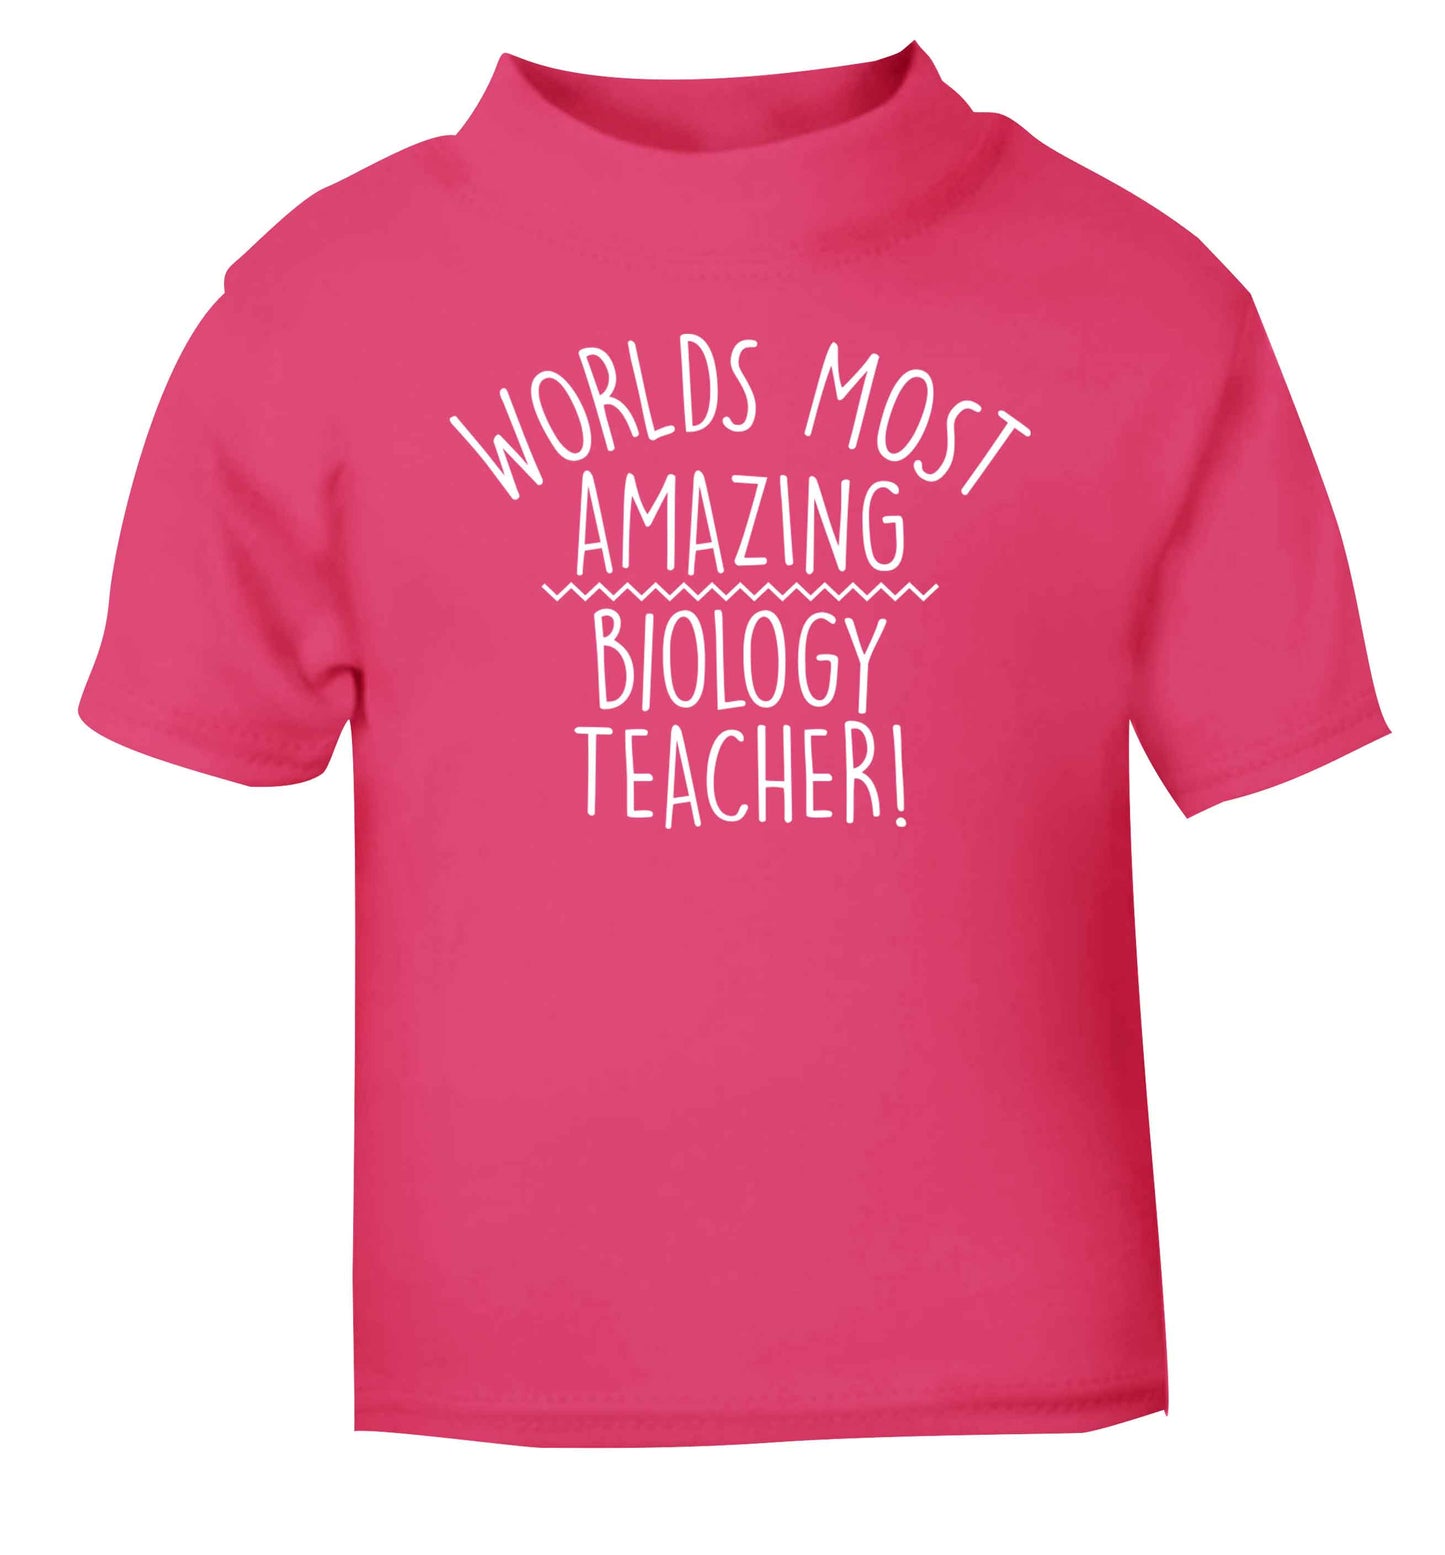 Worlds most amazing biology teacher pink baby toddler Tshirt 2 Years